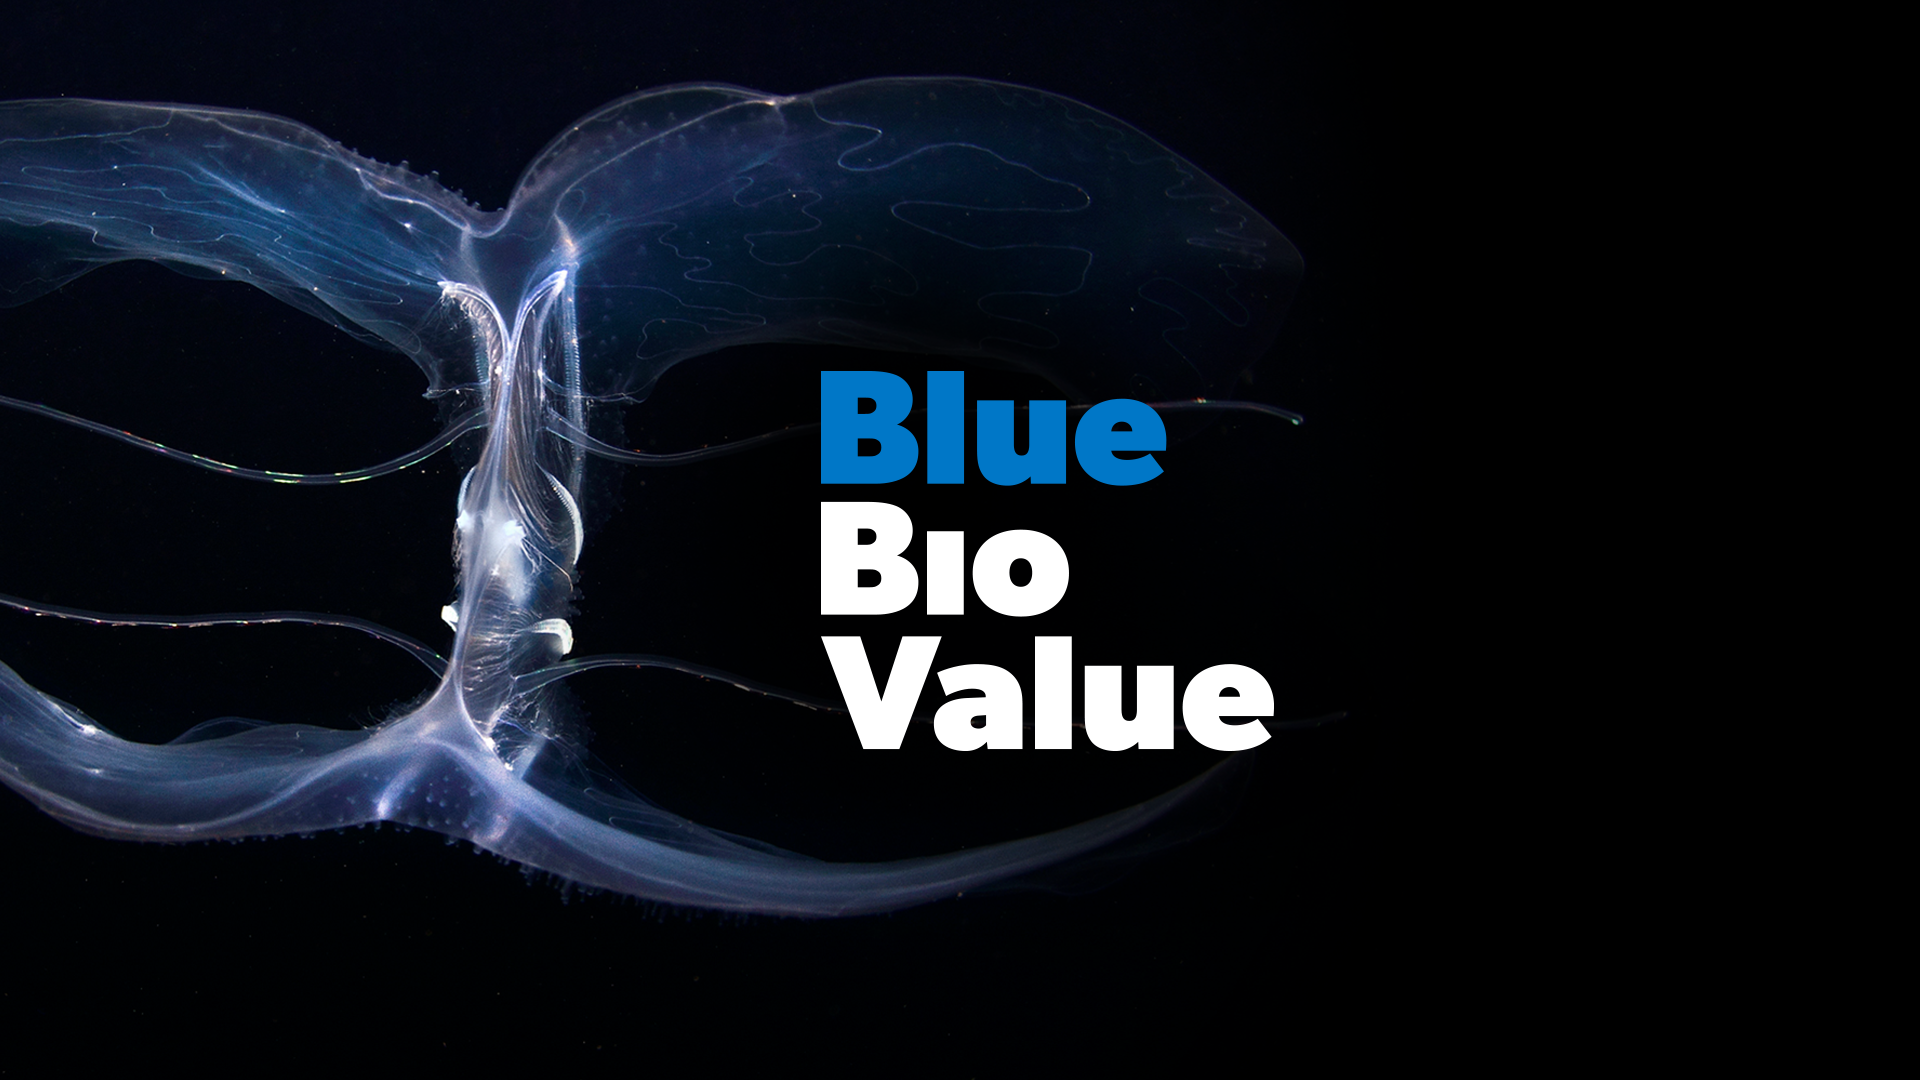 Blue value. Bluebird Bio. Its all Blue.